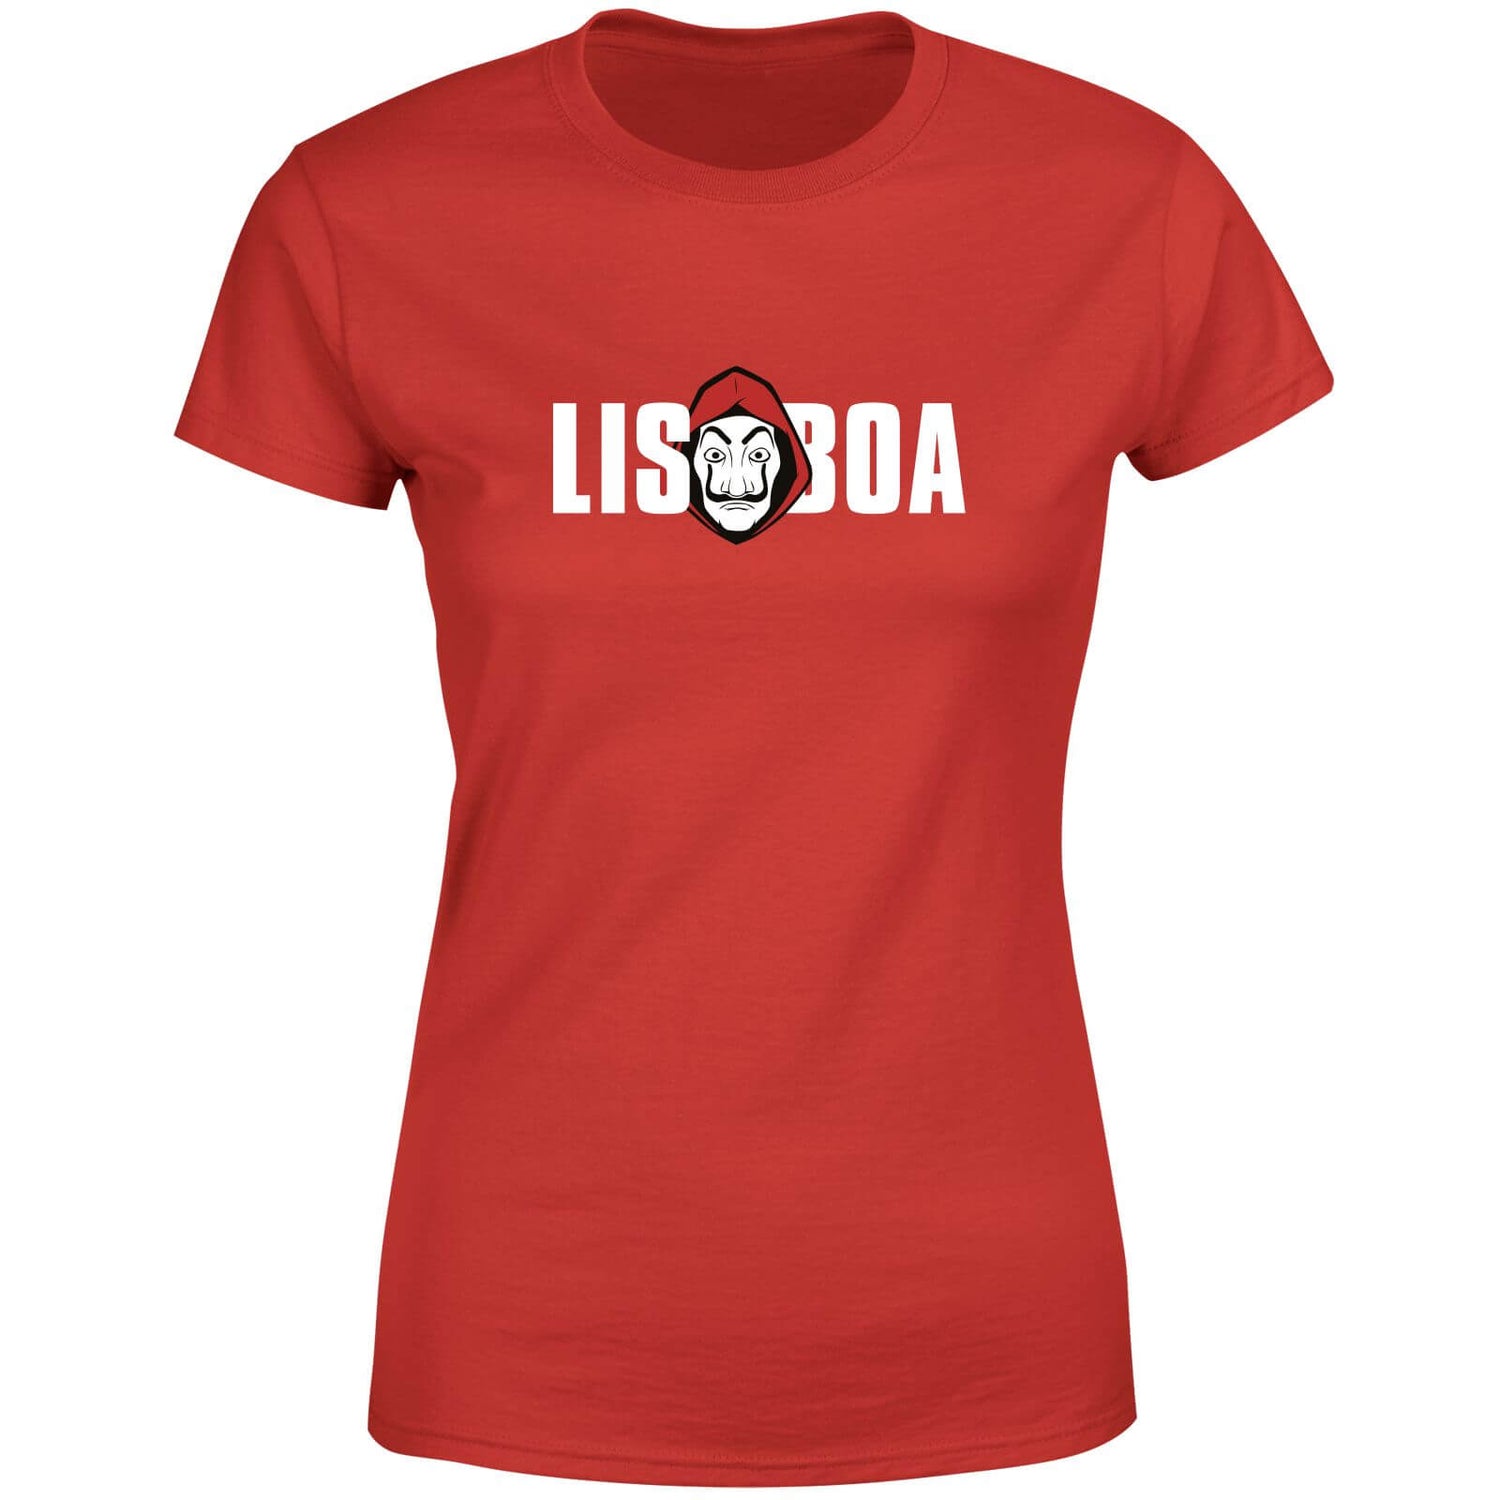 Money Heist Lisboa Women's T-Shirt - Rood